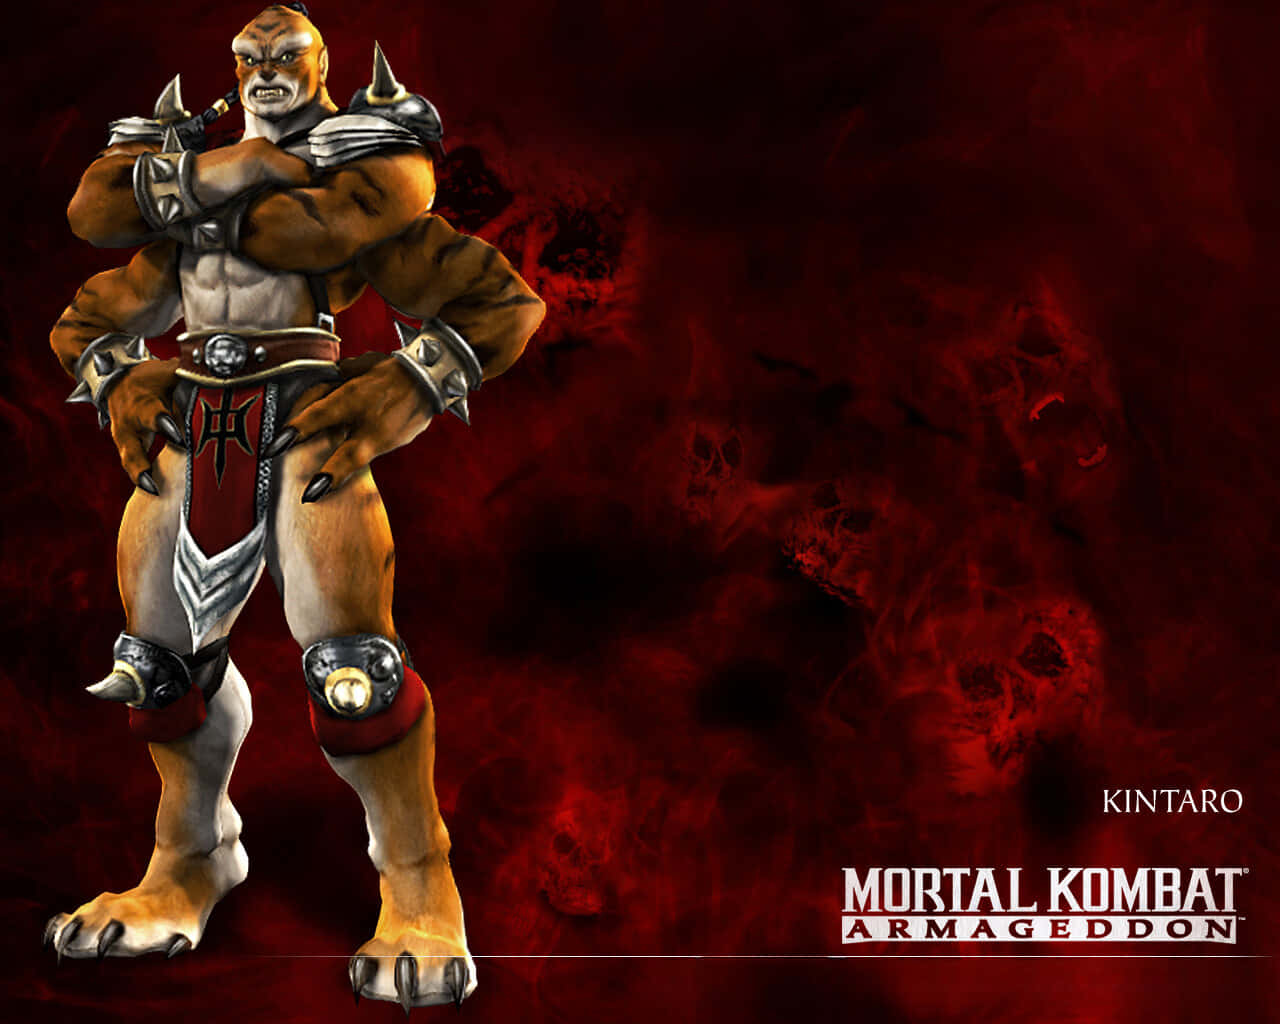 Mortal kombat, Game character, Armageddon